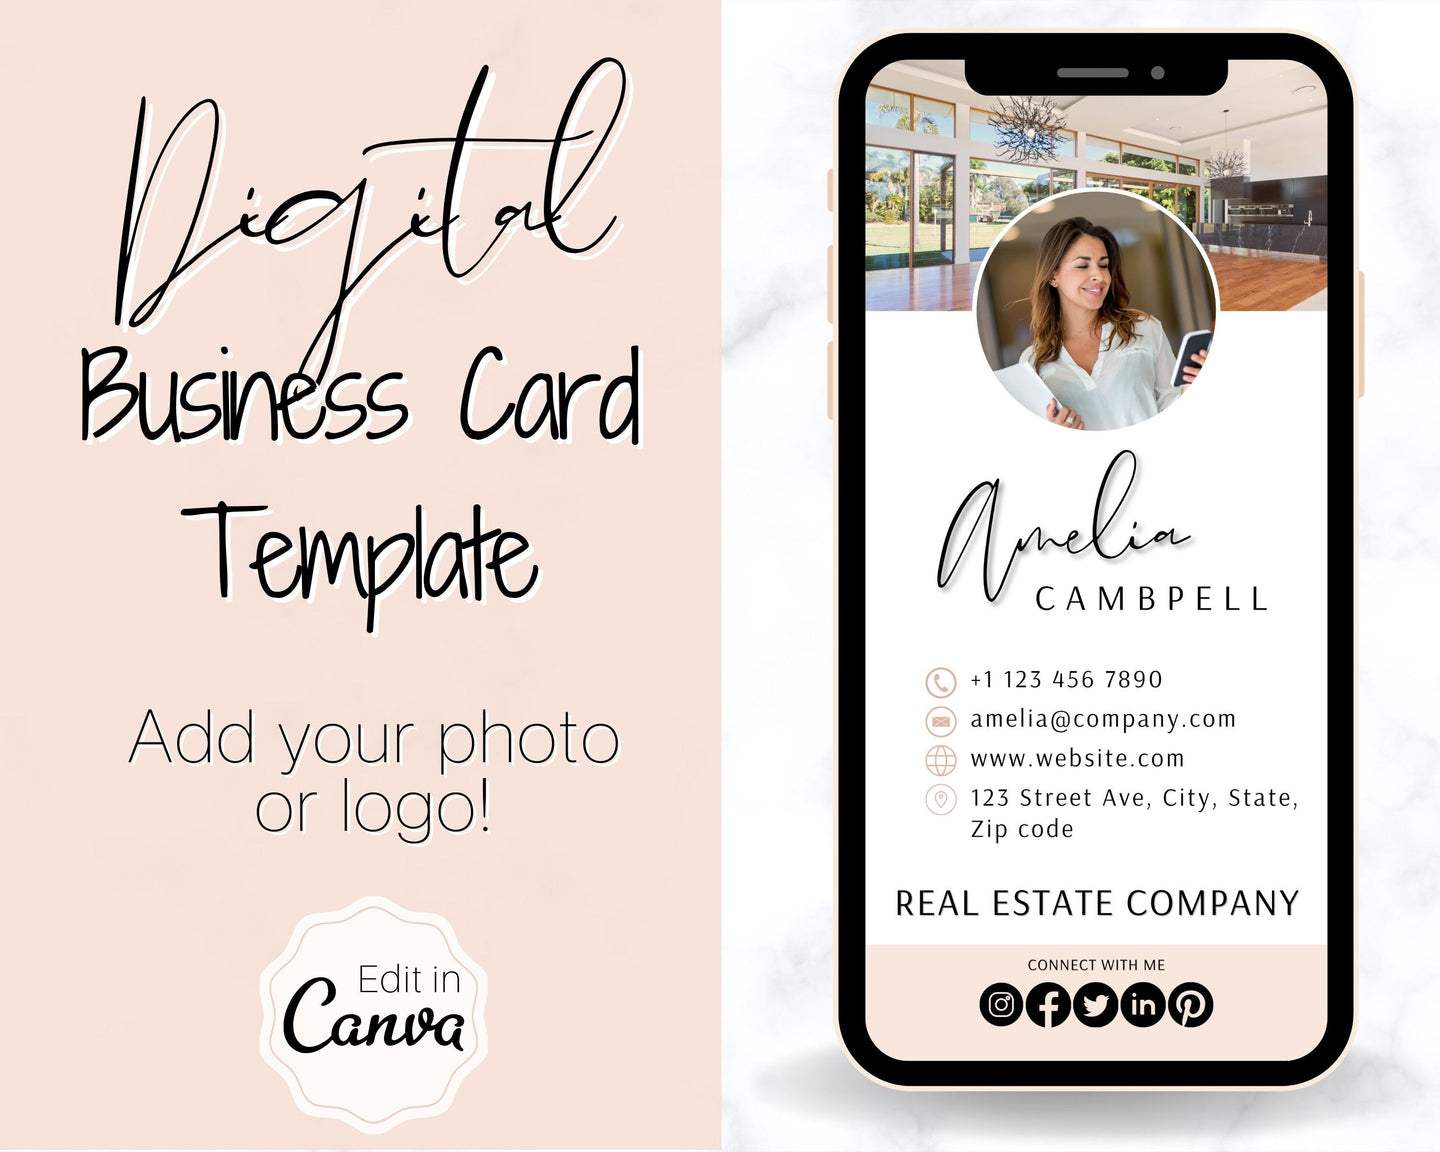 Digital Business Card Template. DIY add logo & photo! Editable Canva Design. Modern, Realtor Marketing, Real Estate, Realty Professional | Pink Style 7